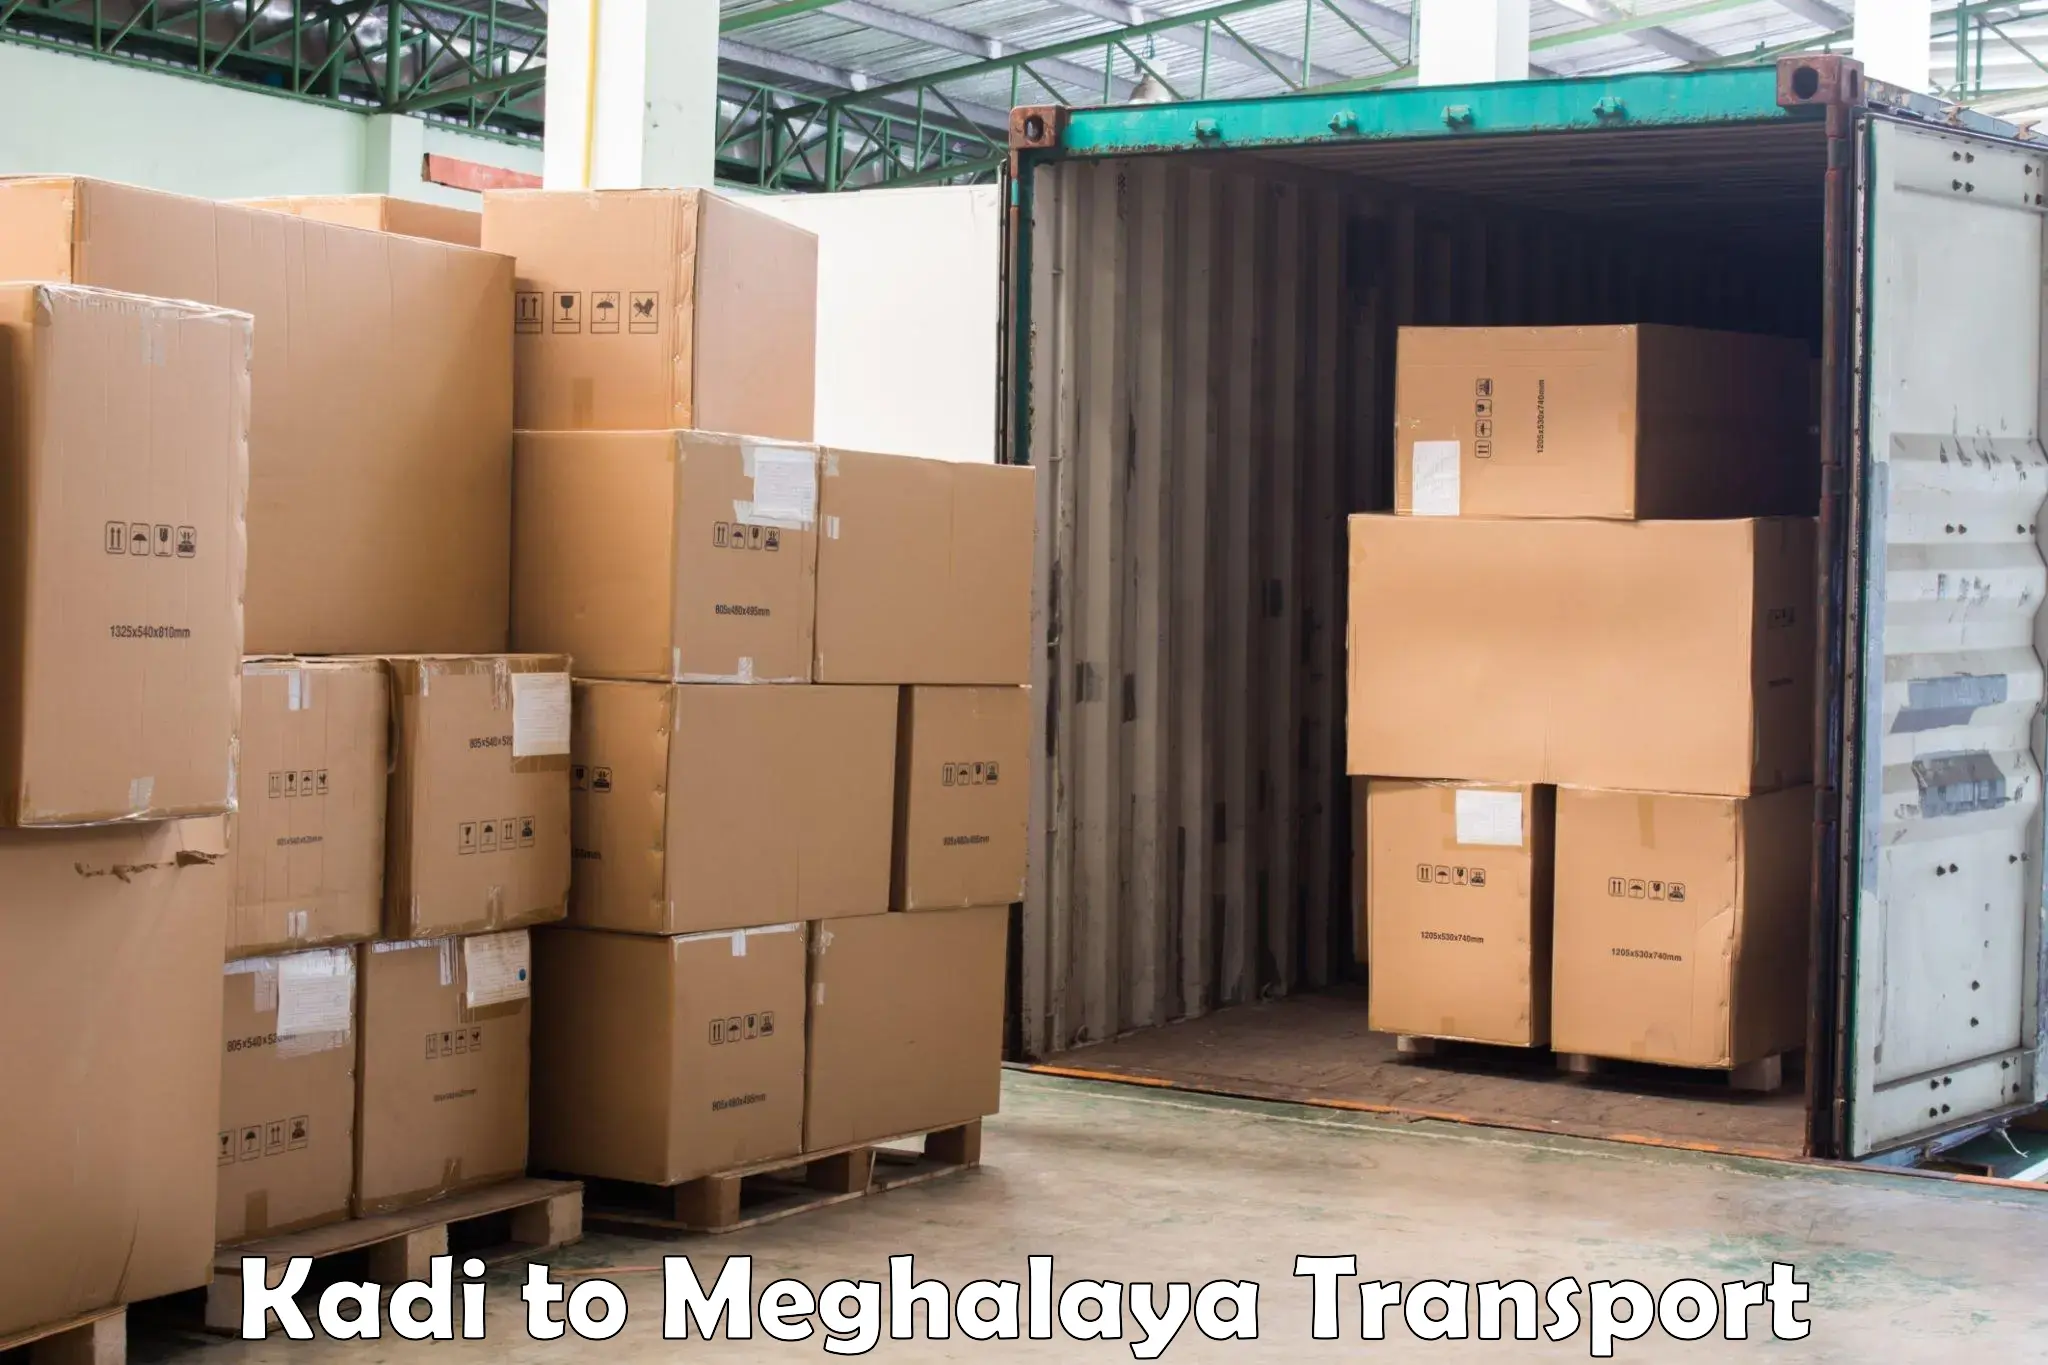 Transport in sharing in Kadi to Meghalaya